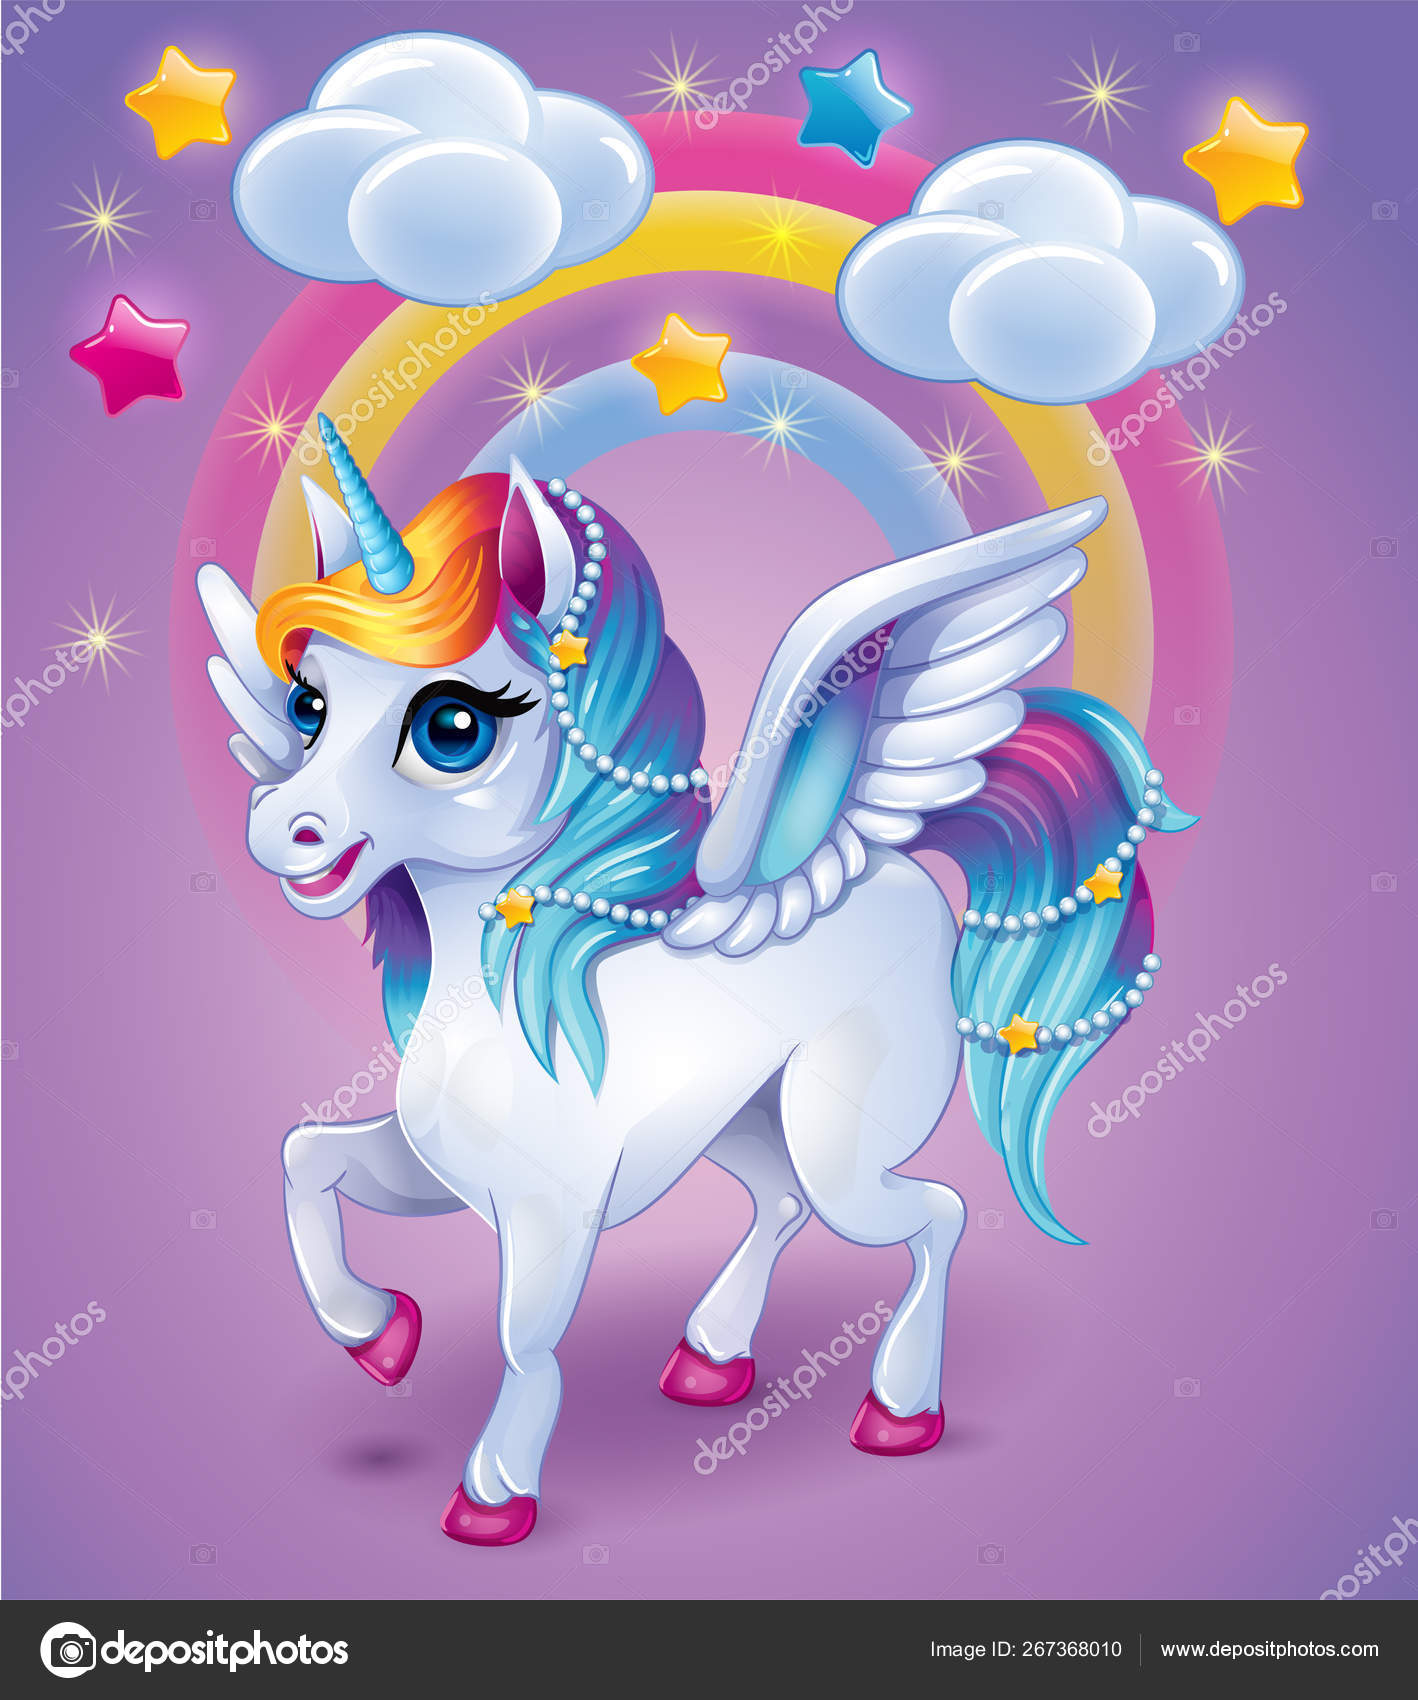 Cute Rainbow Unicorn Rainbow Background Cartoon Vector Character Vector Image By C Emma008 Vector Stock